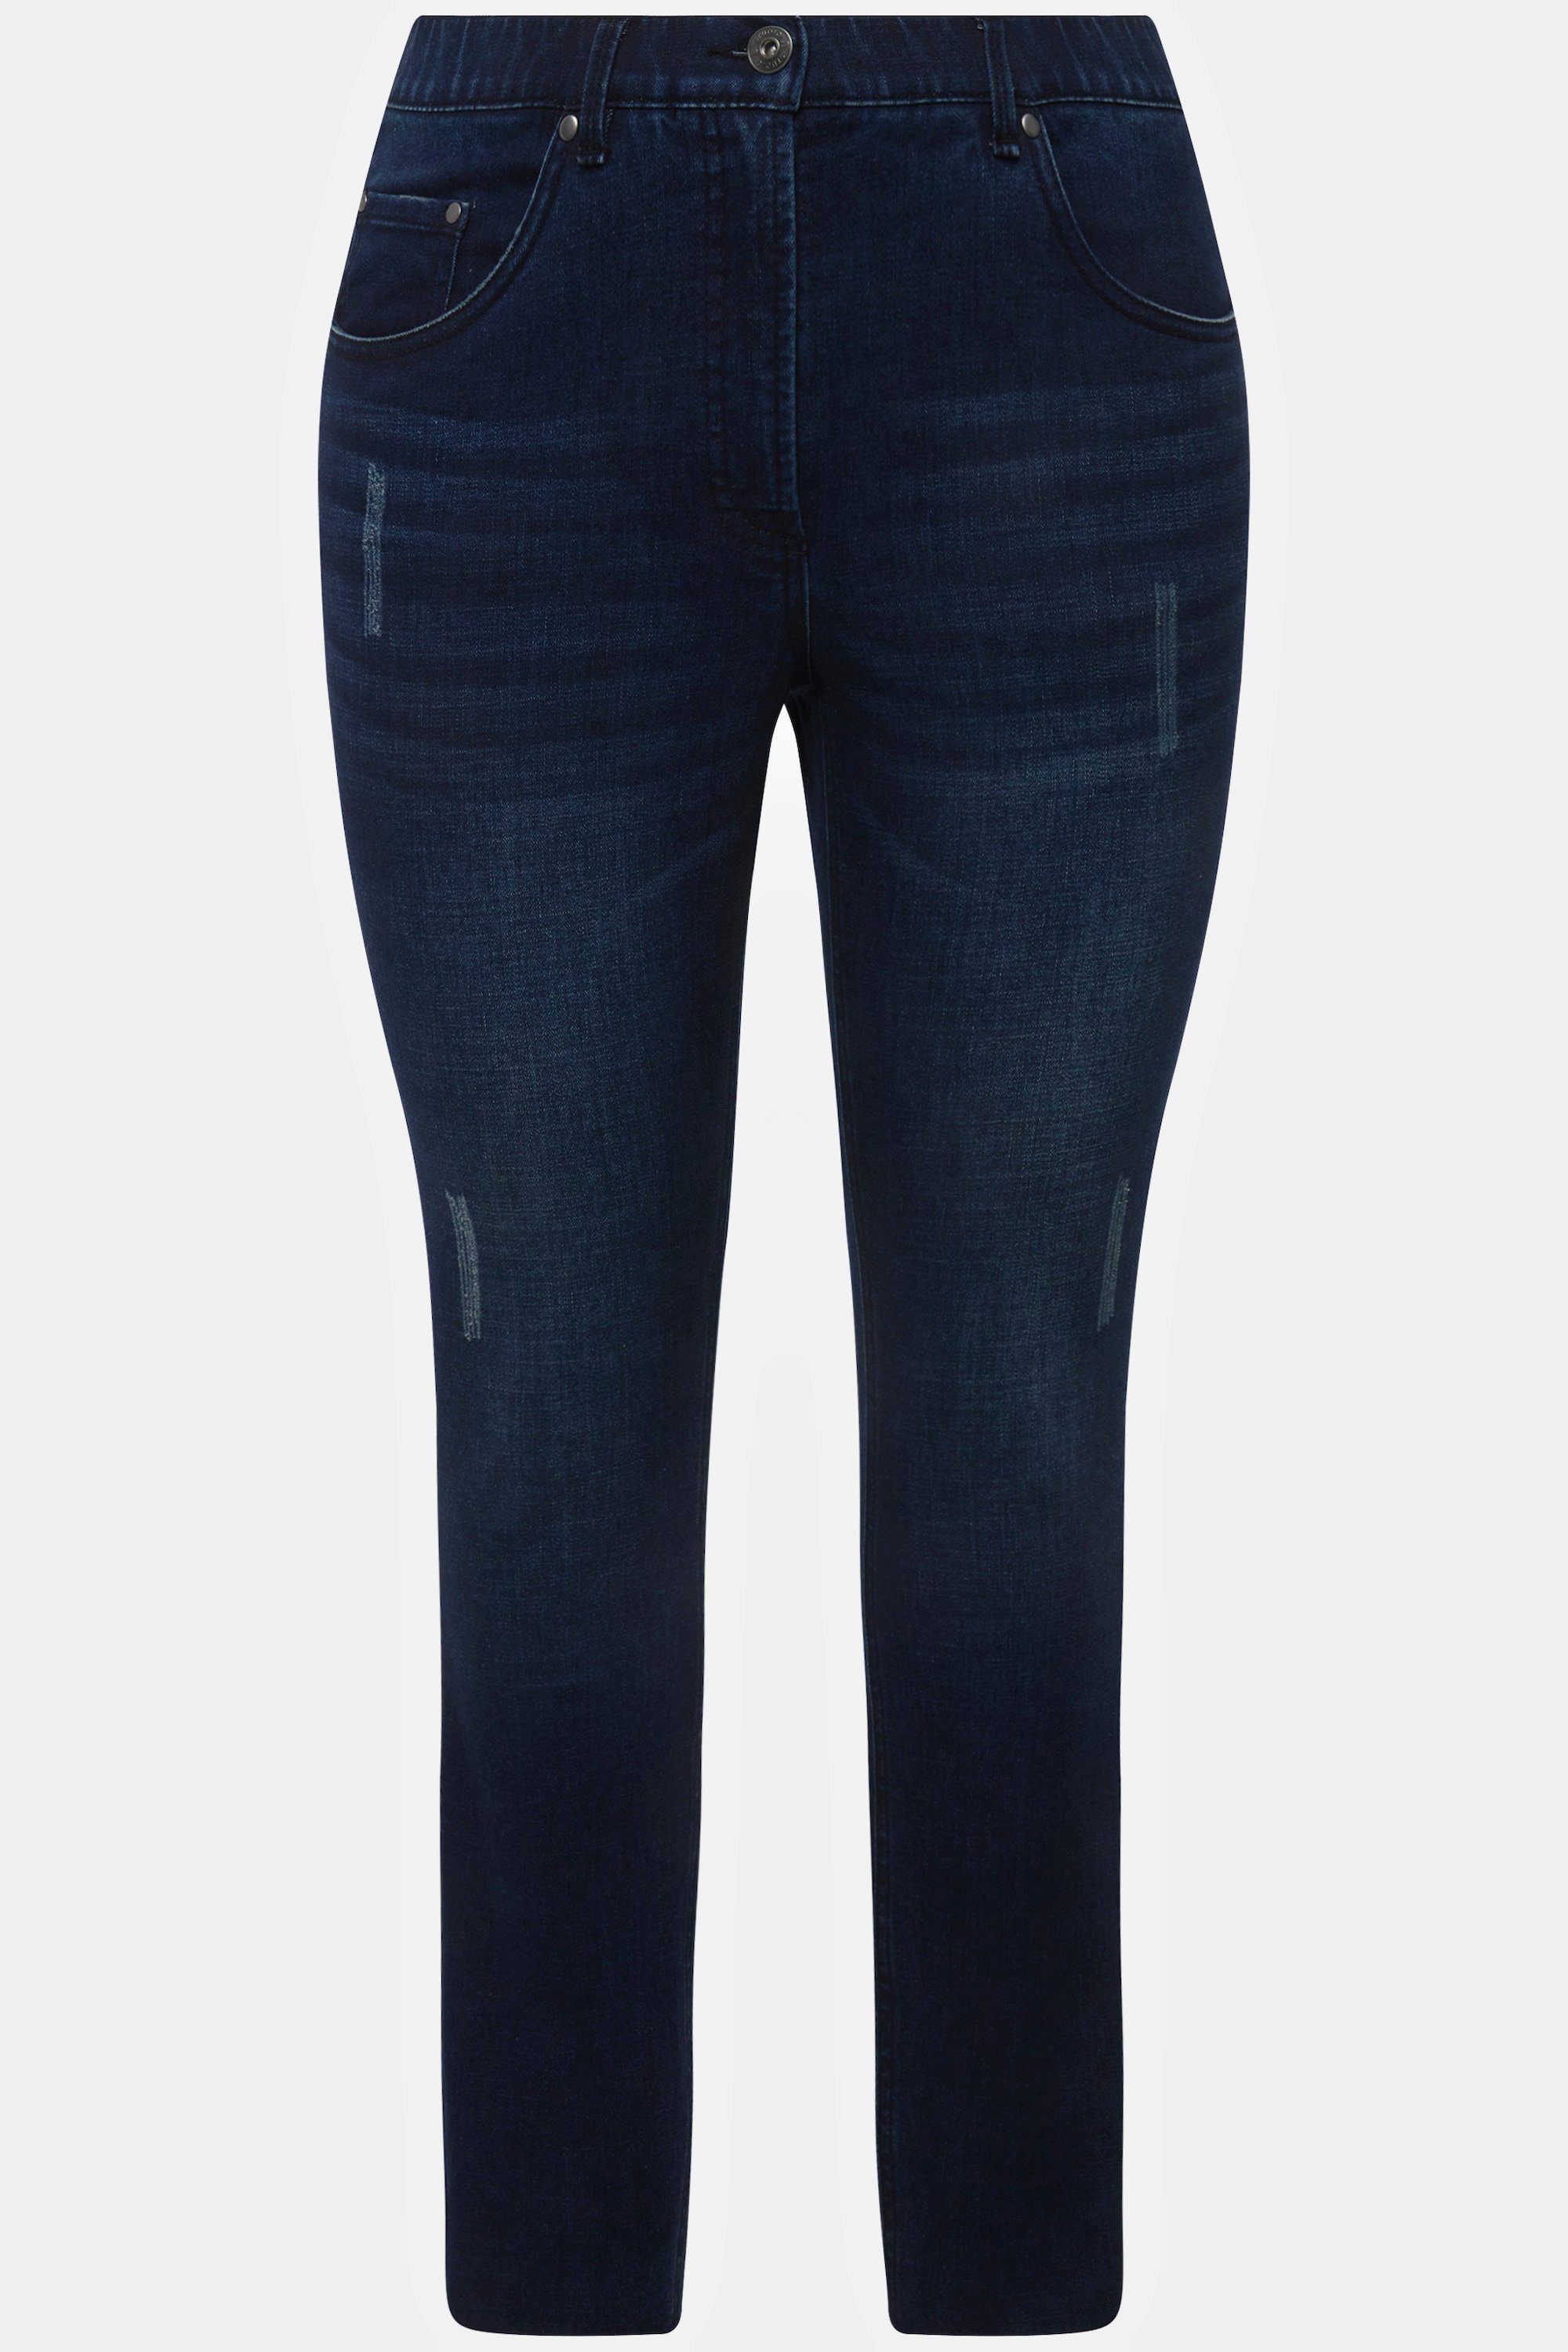 5-Pocket-Jeans dark 5-Pocket Jeans Studio denim Elastikbund blue cutted Saum Untold Skinny